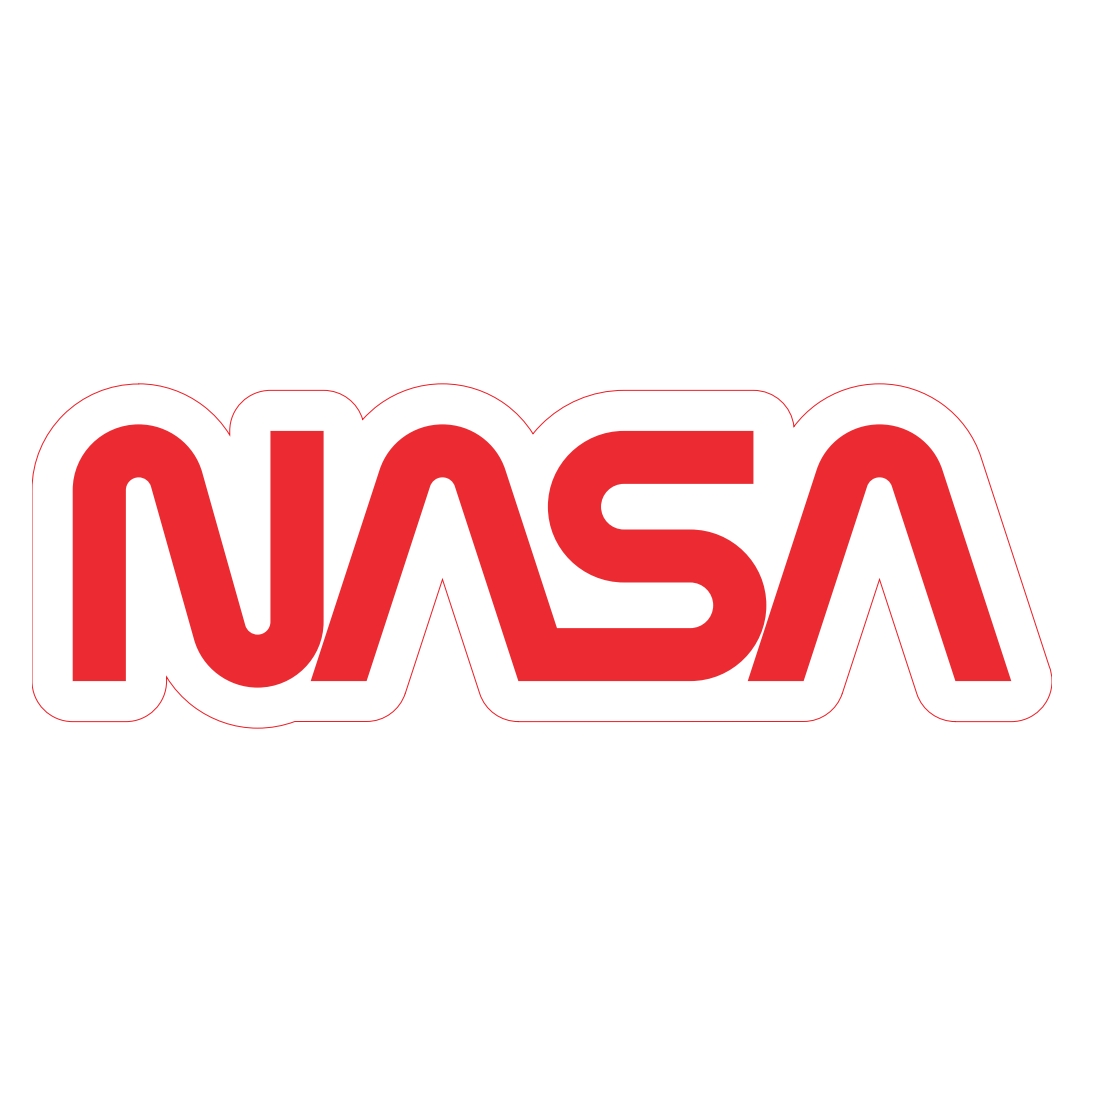 samolepka NASA worm logo 9x3cm červená